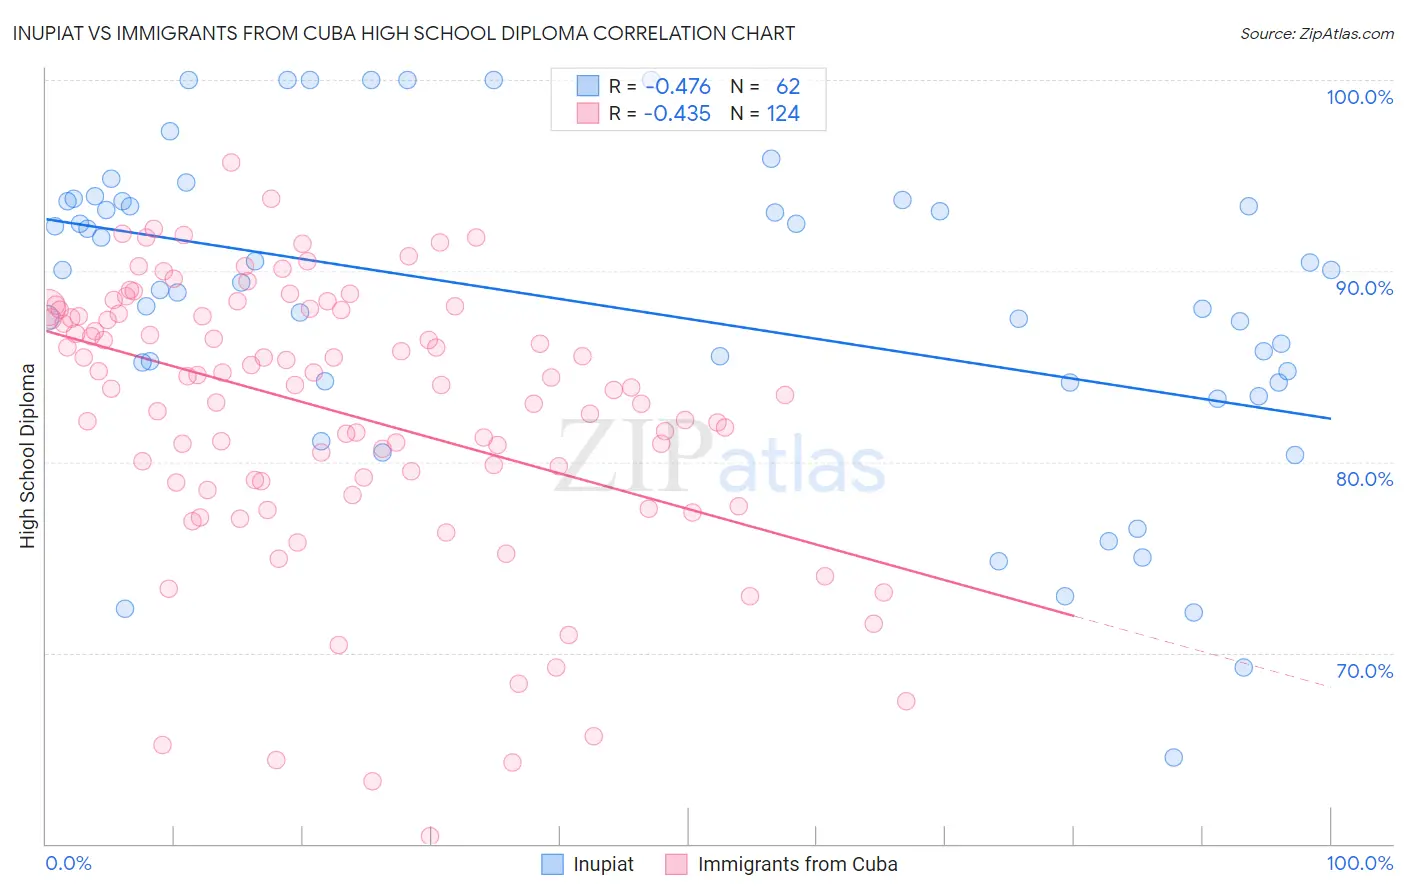 Inupiat vs Immigrants from Cuba High School Diploma